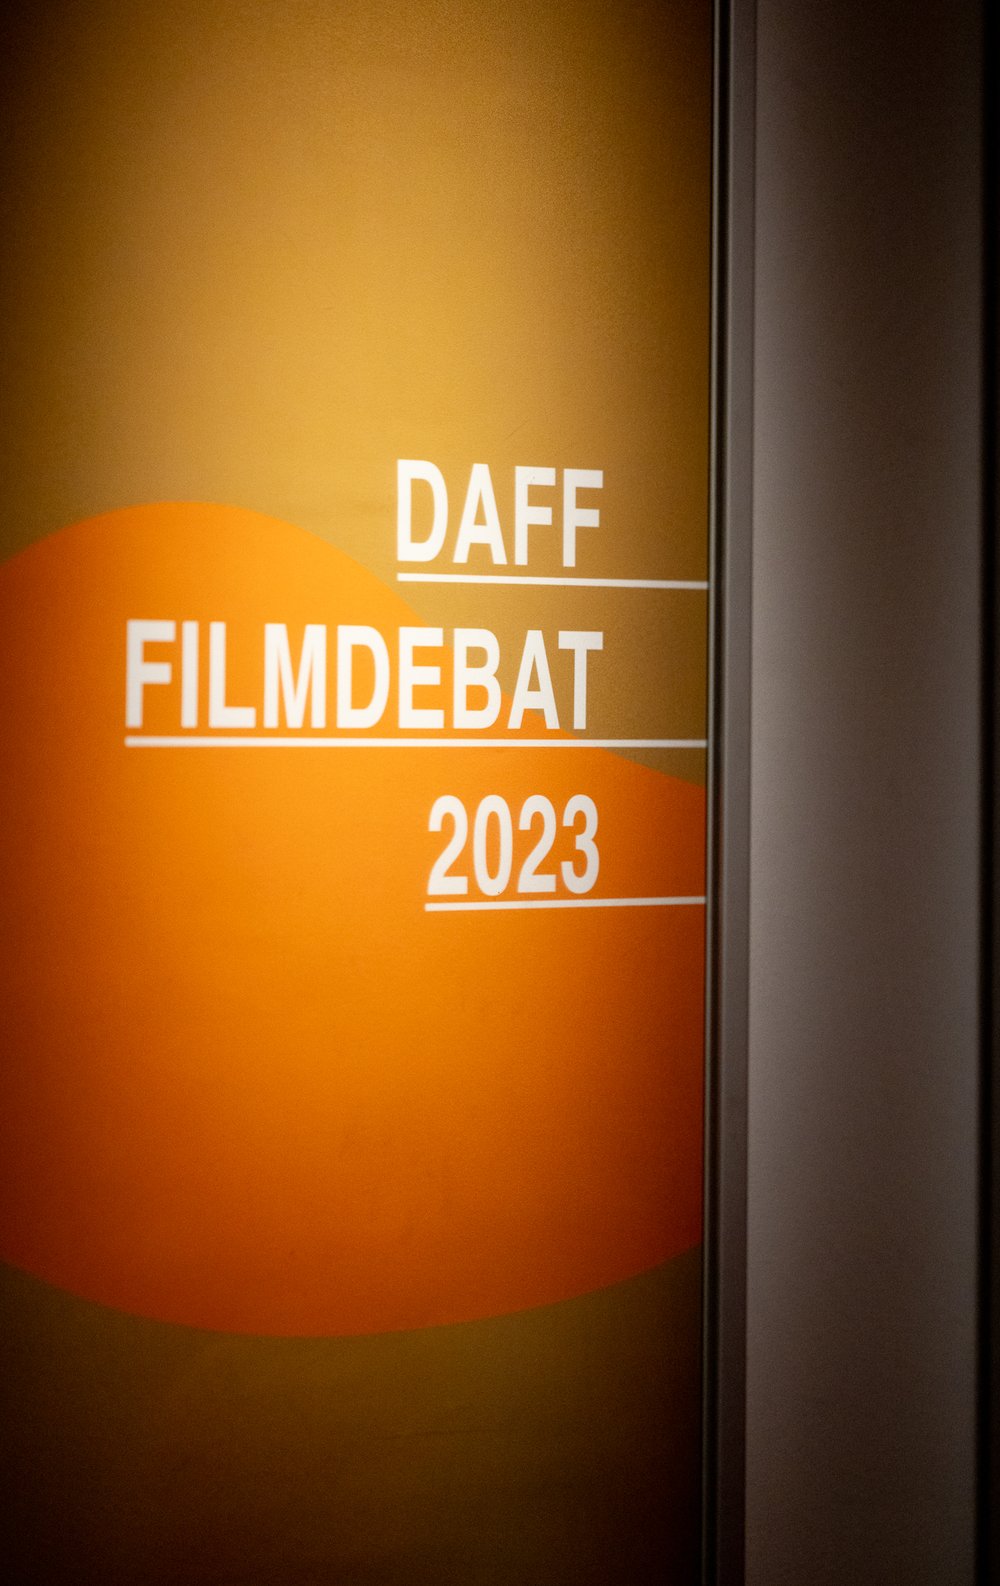 DAFF Filmdebat 2023 LR-036.jpg